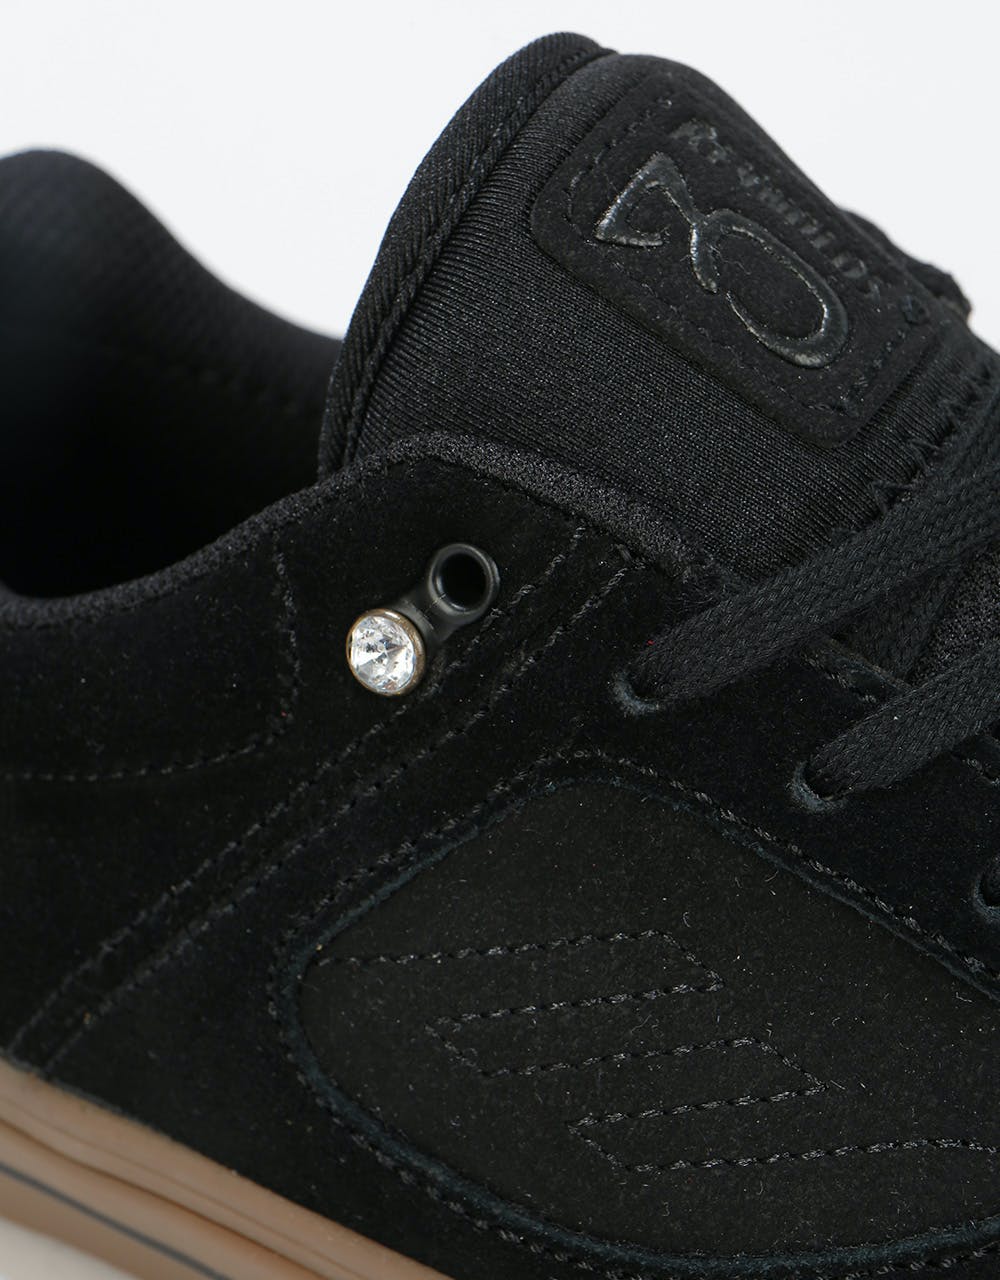 Emerica Reynolds 3 G6 Vulc Skate Shoes - Black/Gum